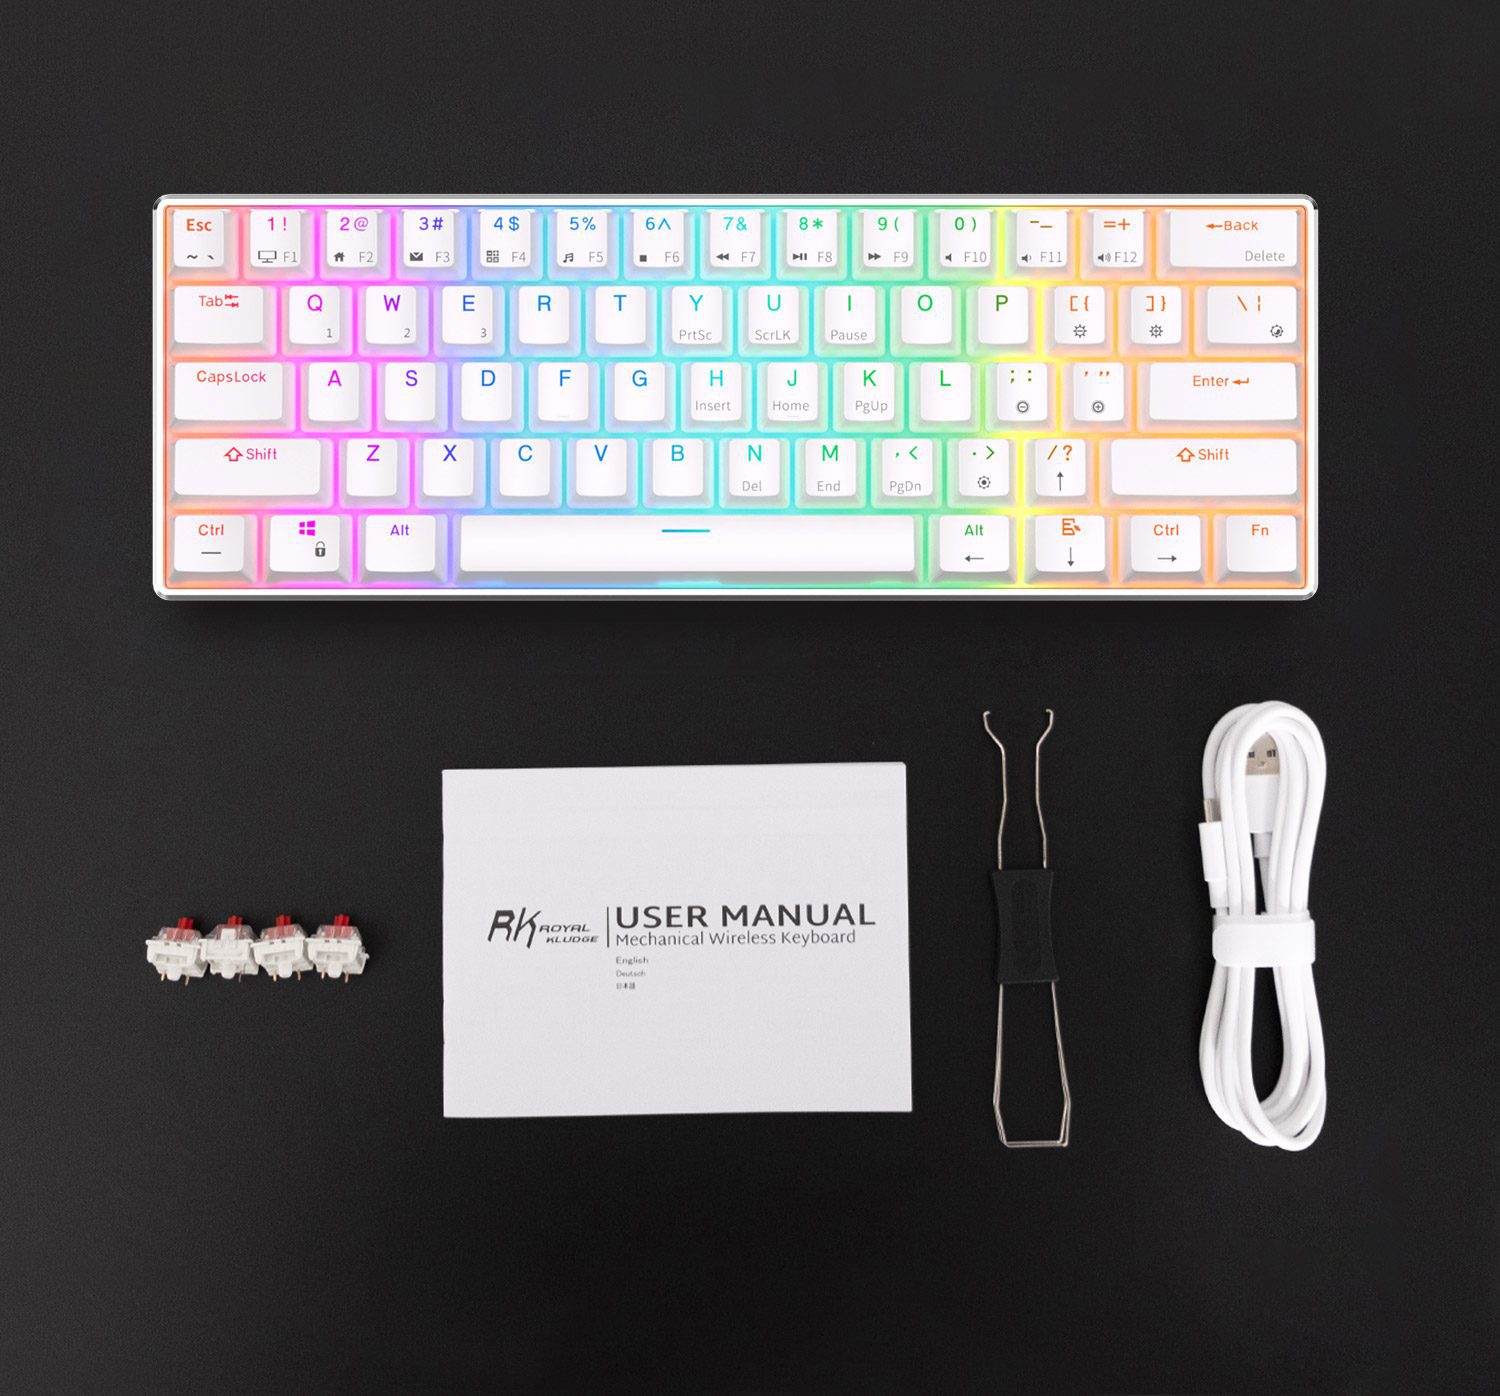 ROYAL KLUDGE RK61 PRO 2.4G Wireless Mechanical Keyboard Aluminium Frame 60% Compact RGB Backlight USB Bluetooth Gamer Keyboard